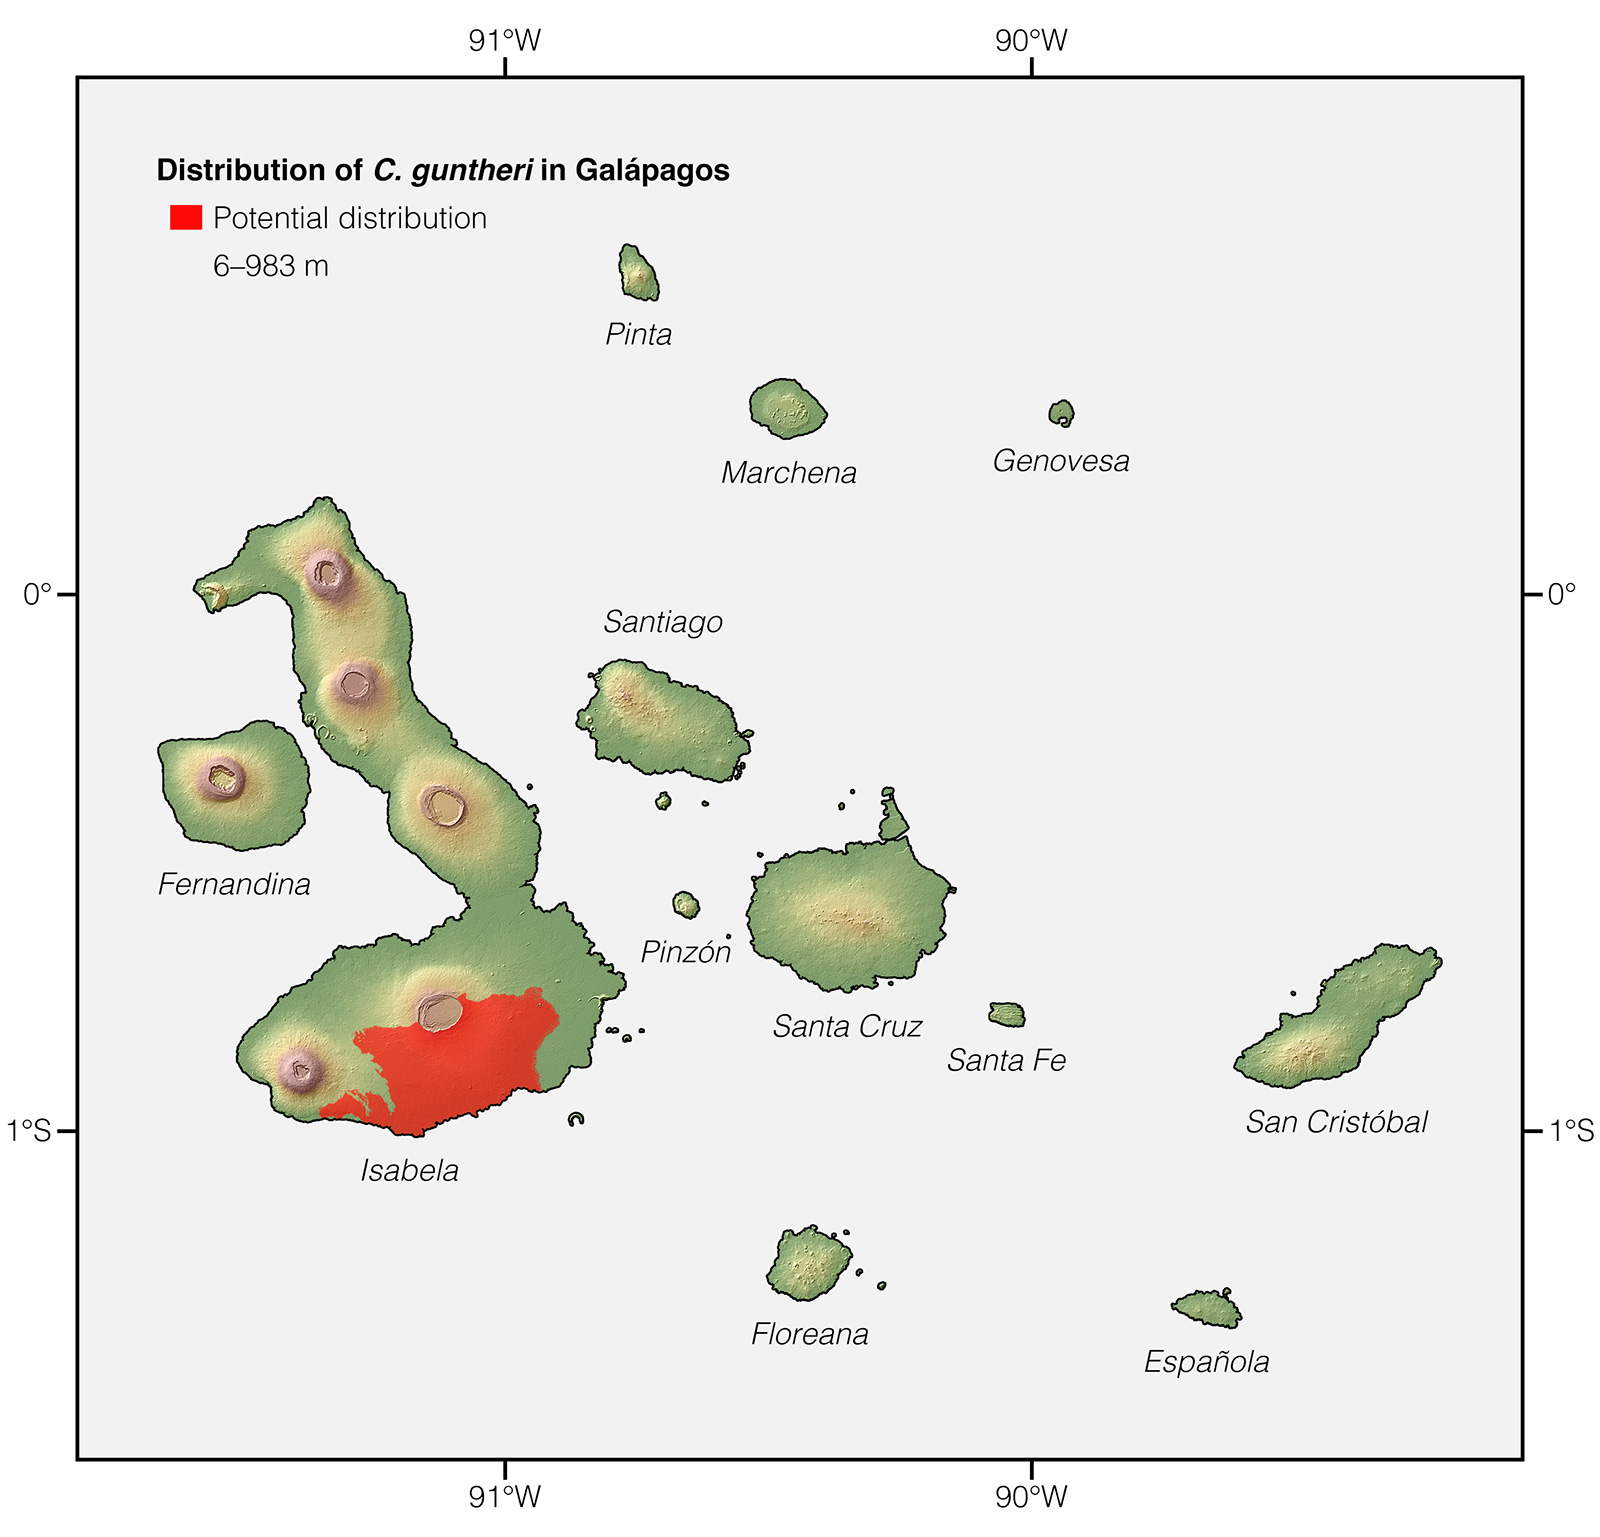 Distribution of Chelonoidis guntheri